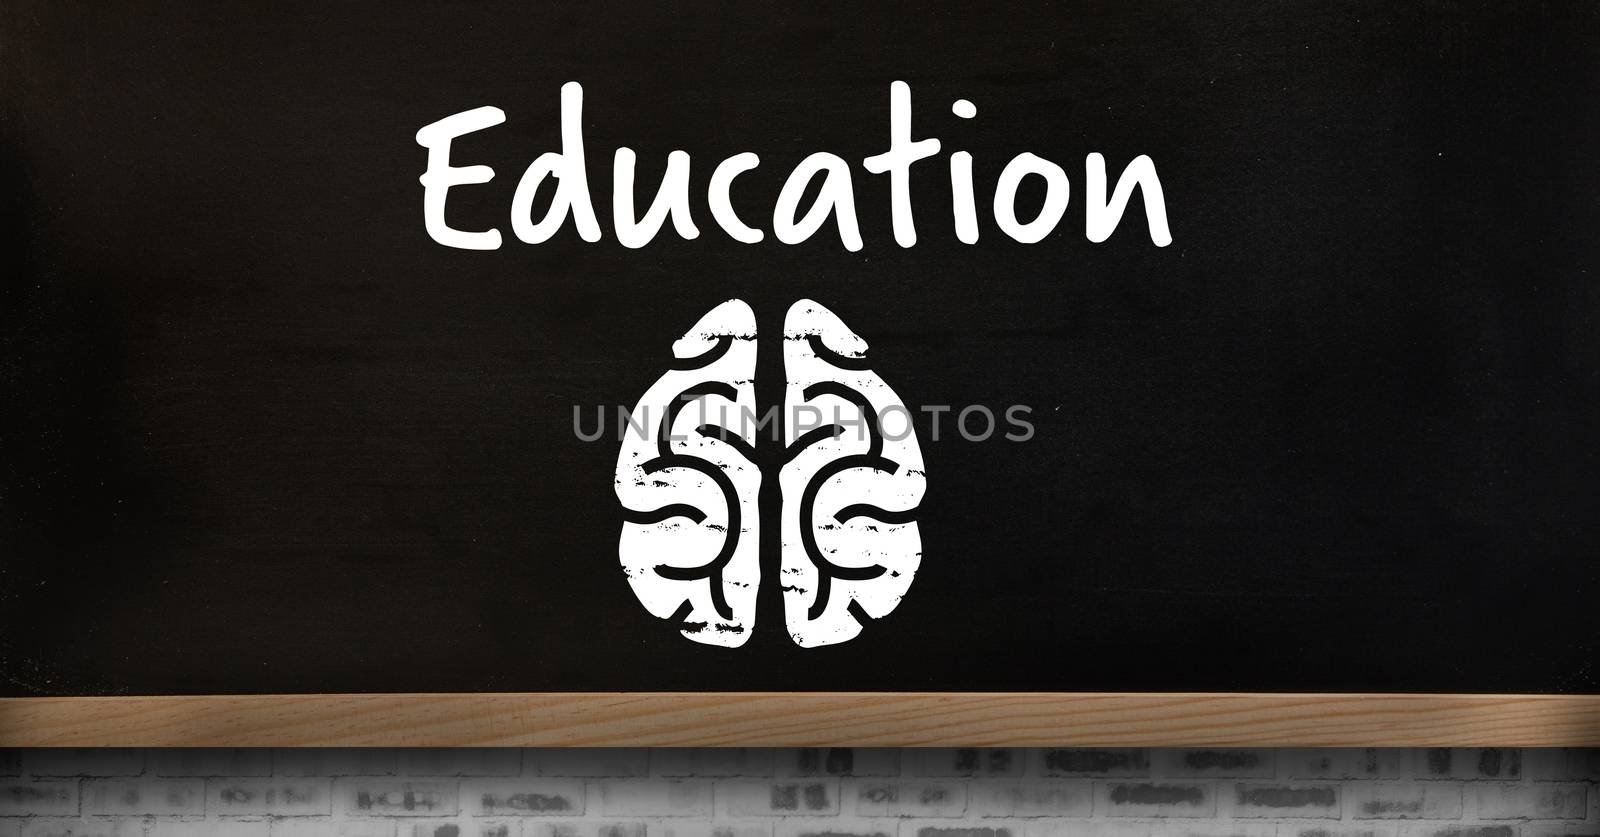 Education text and brain icon on blackboard by Wavebreakmedia